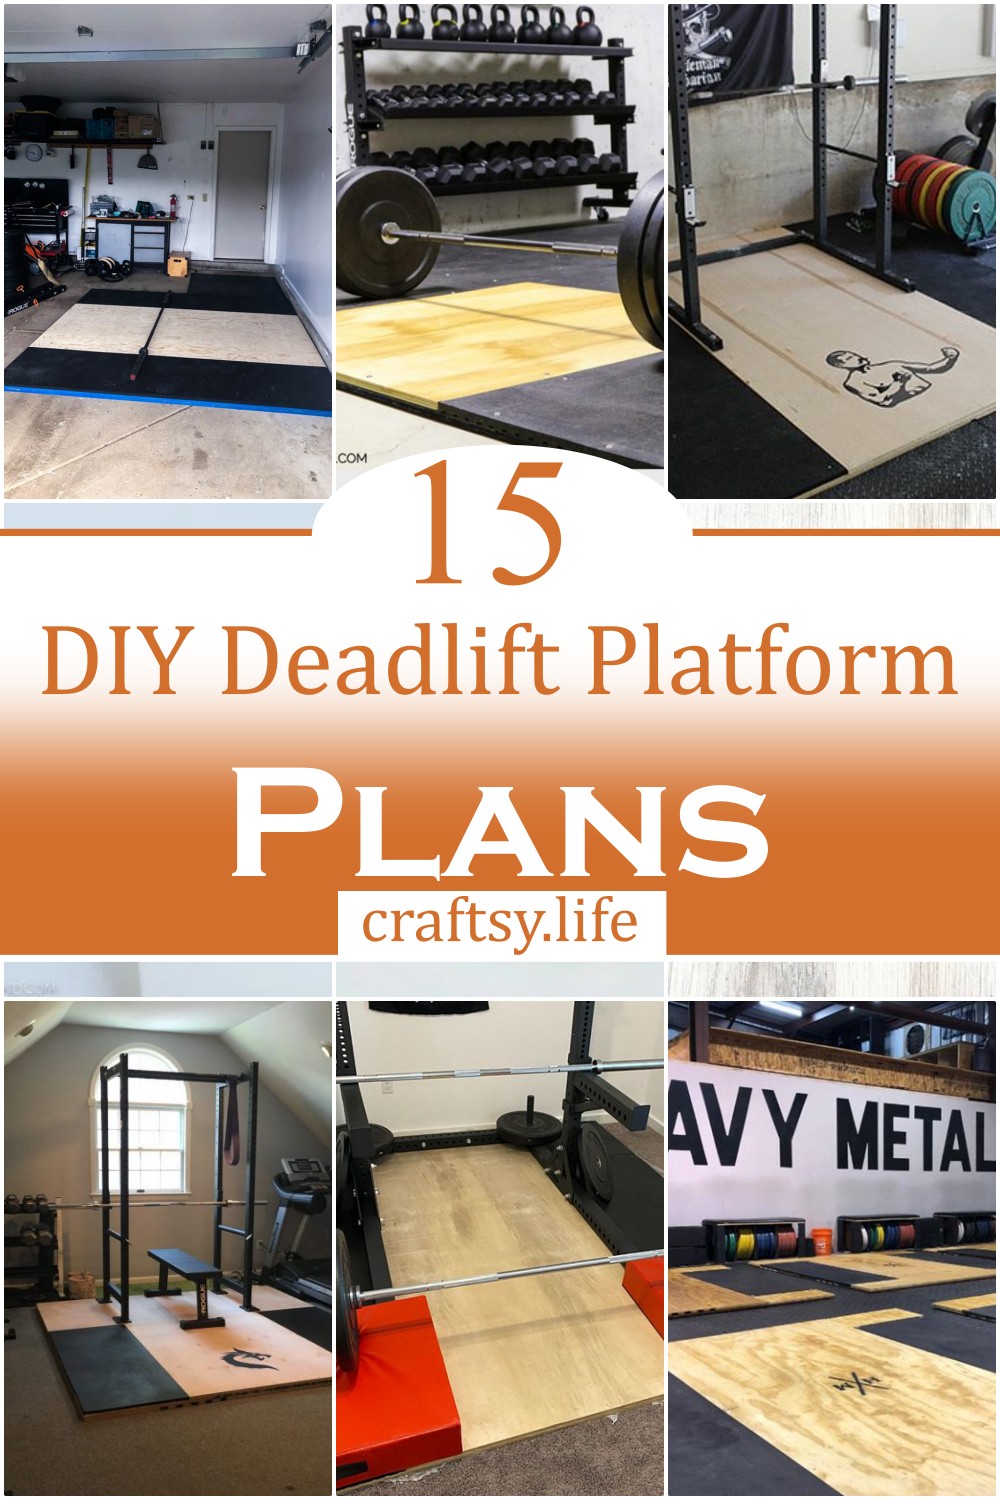 DIY Deadlift Platform Plans